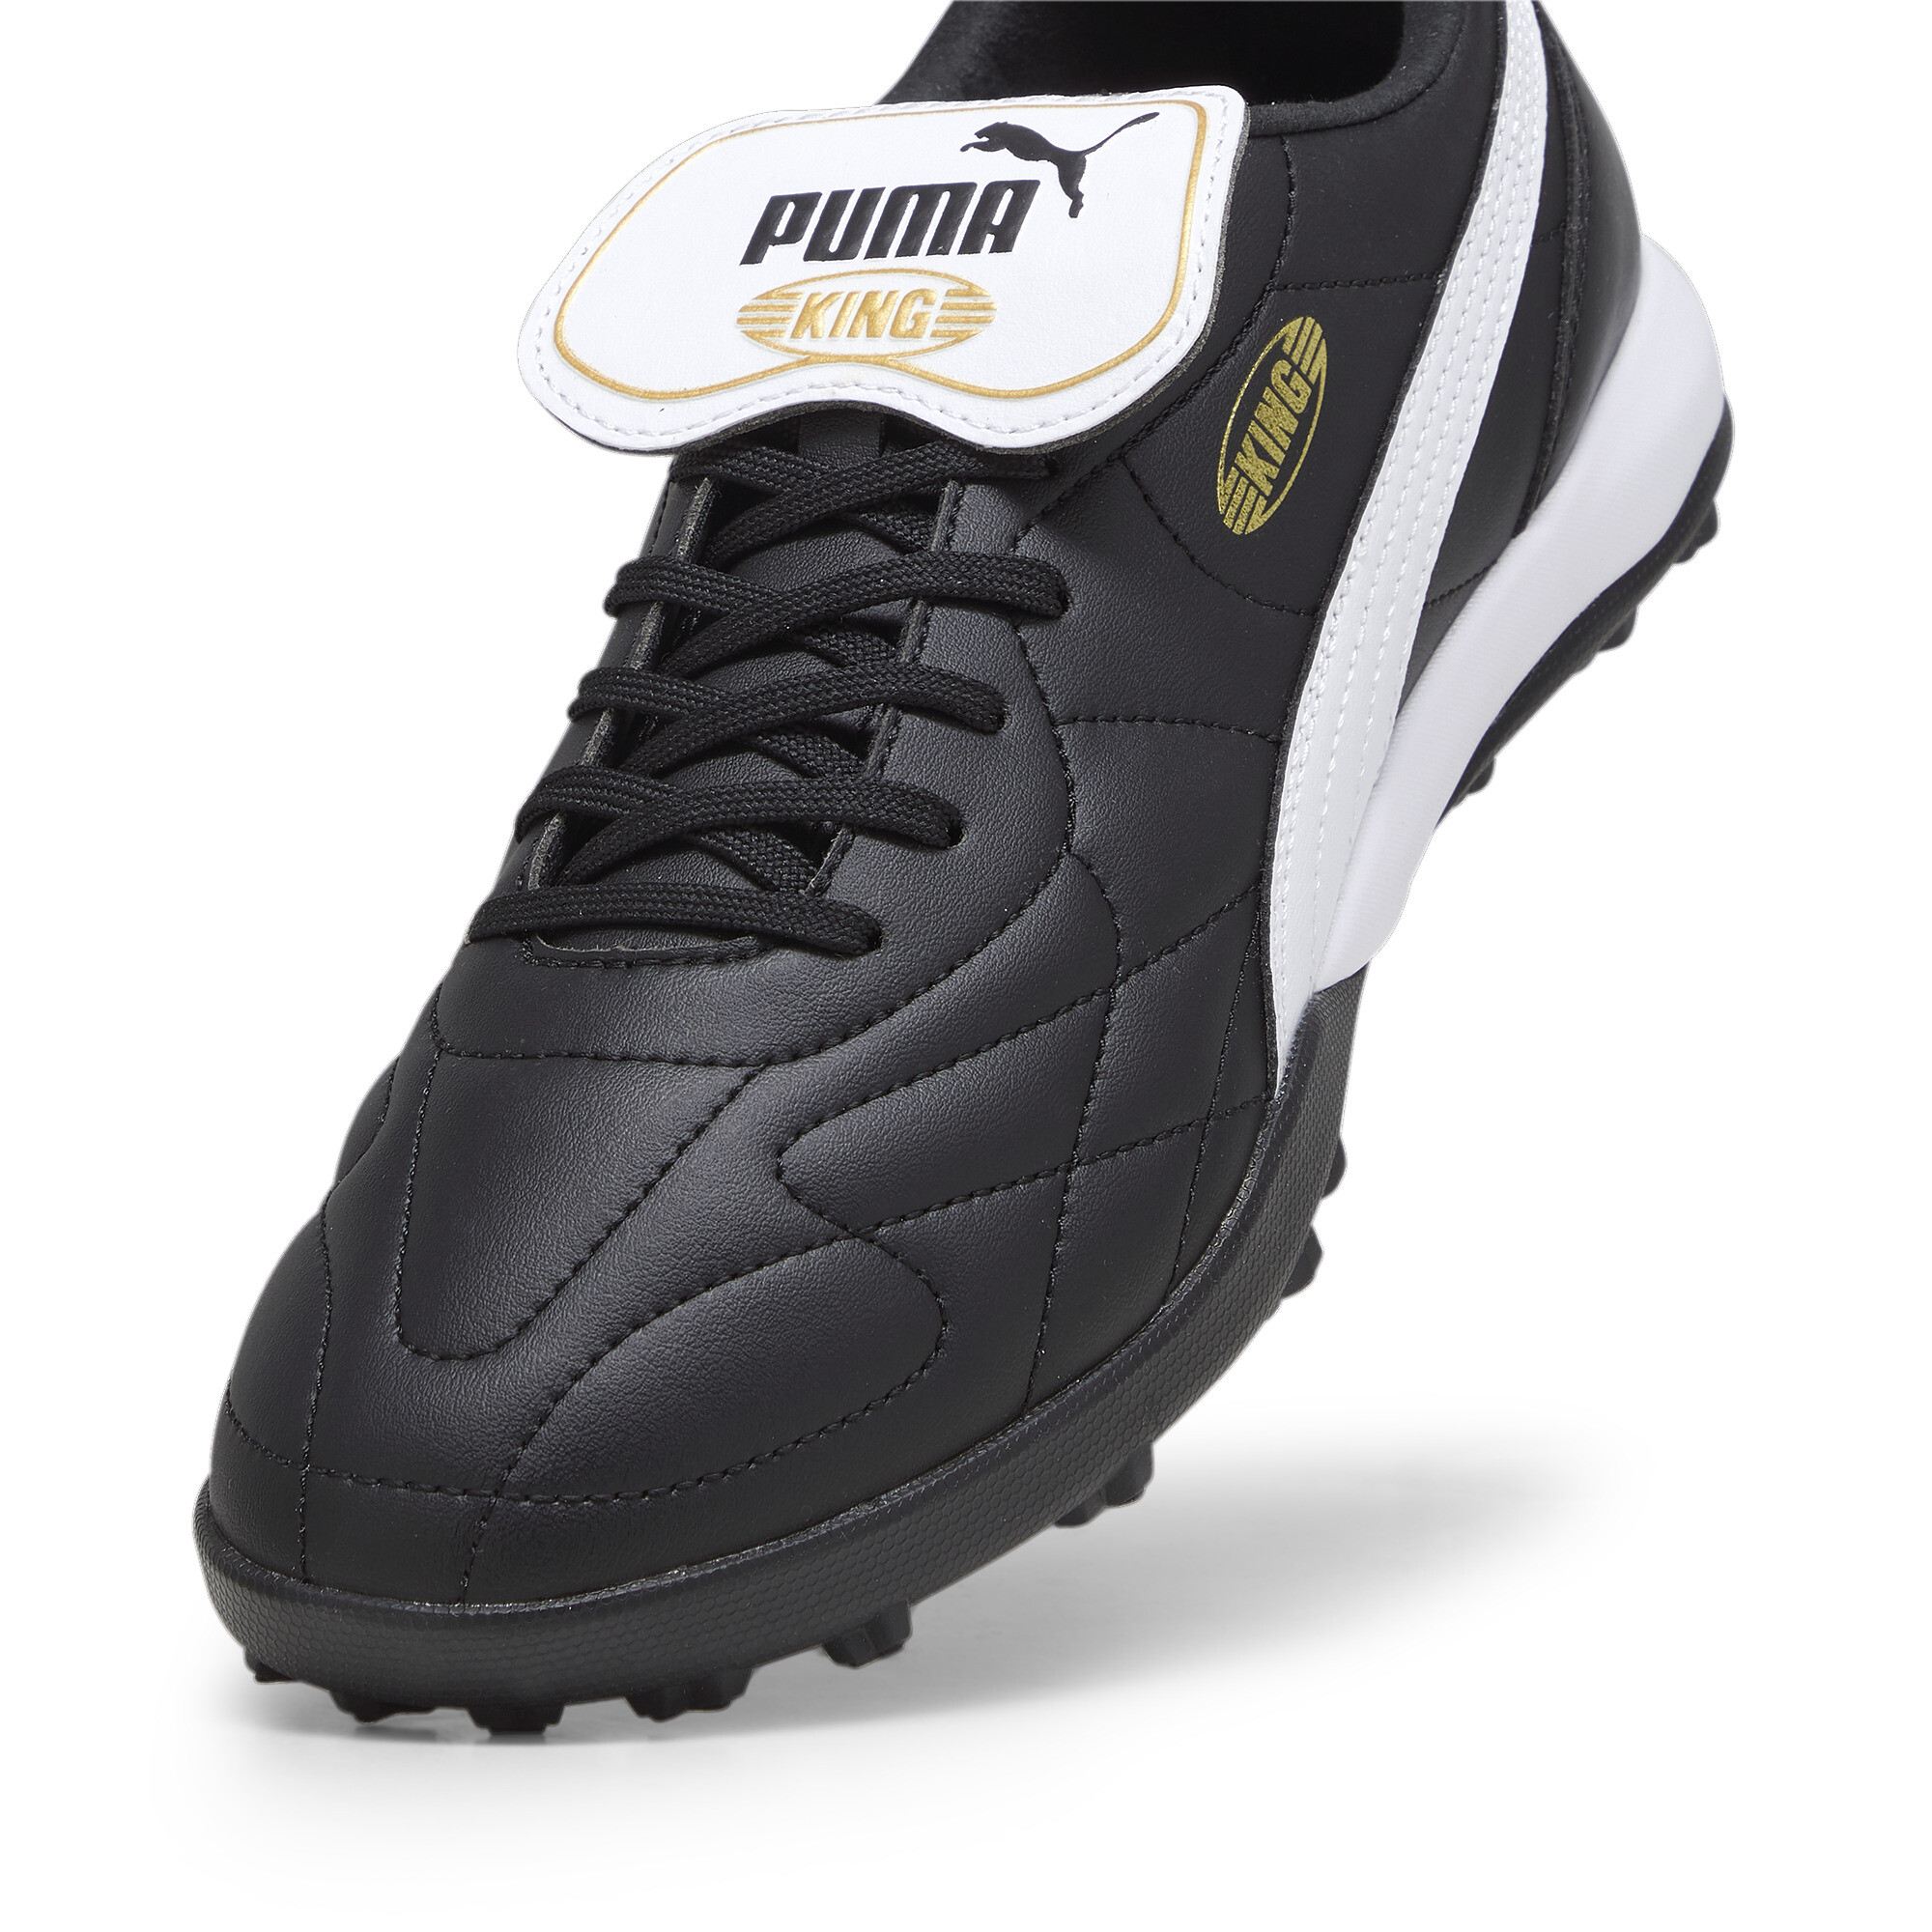 Men's PUMA KING TOP TT Football Boots In Black/Gold, Size EU 44